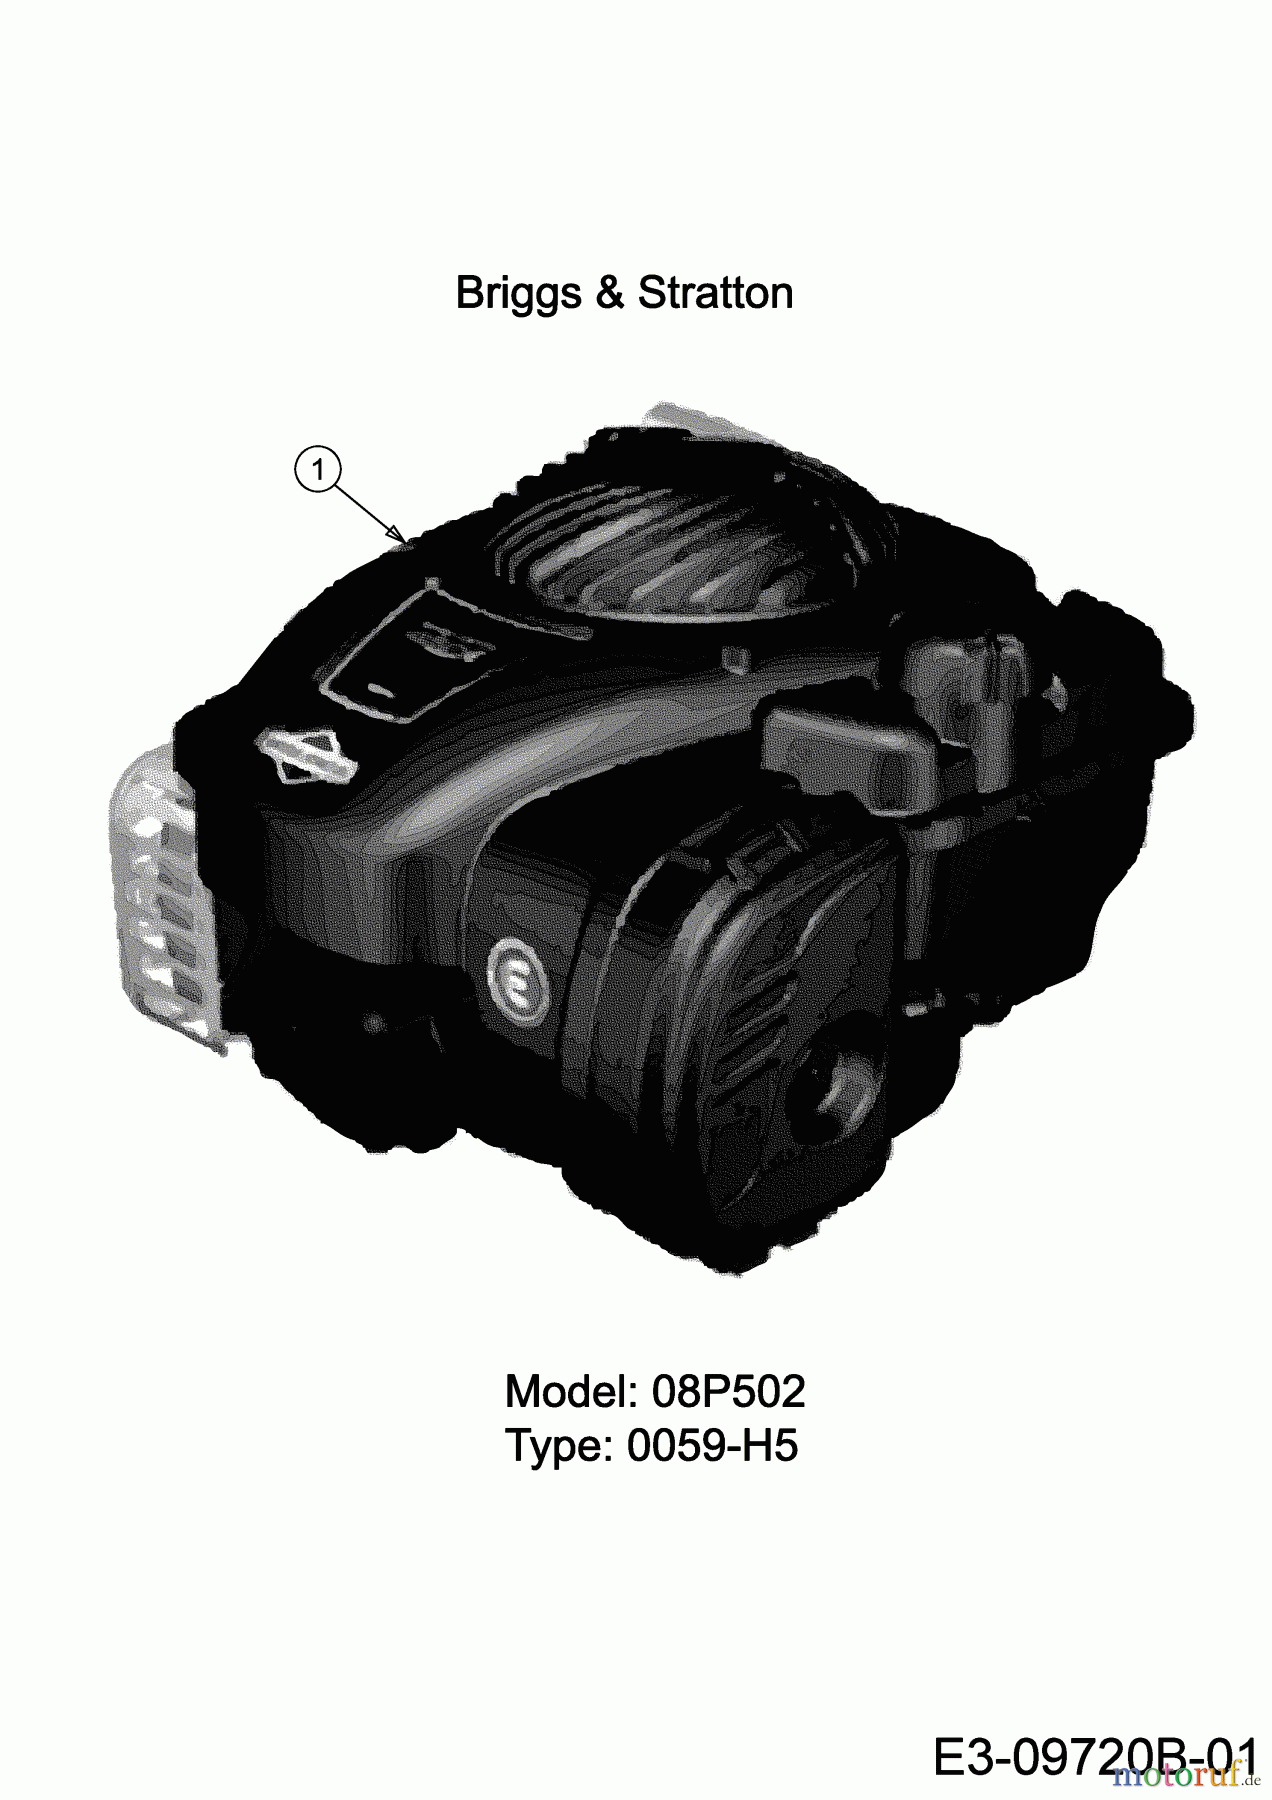  MTD Motormäher 51 BC 11E-025J600 (2019) Motor Briggs & Stratton